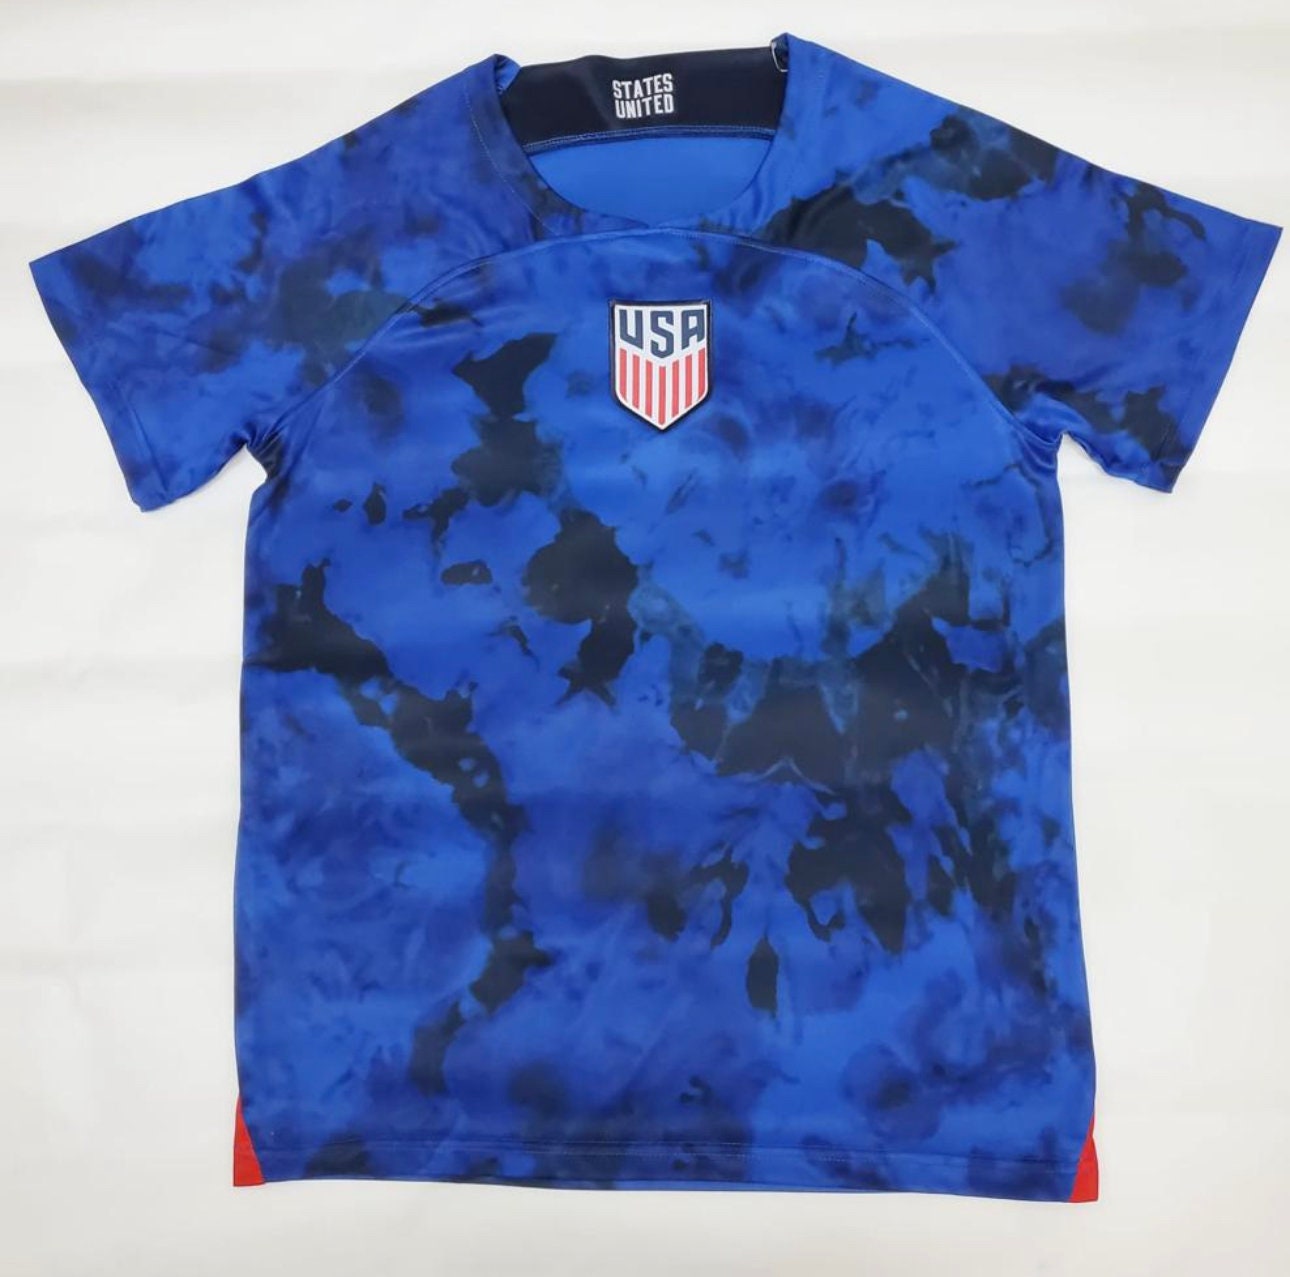 USA Away 2022 Custom Donovan #10 Soccer Adult Fan Football Jersey